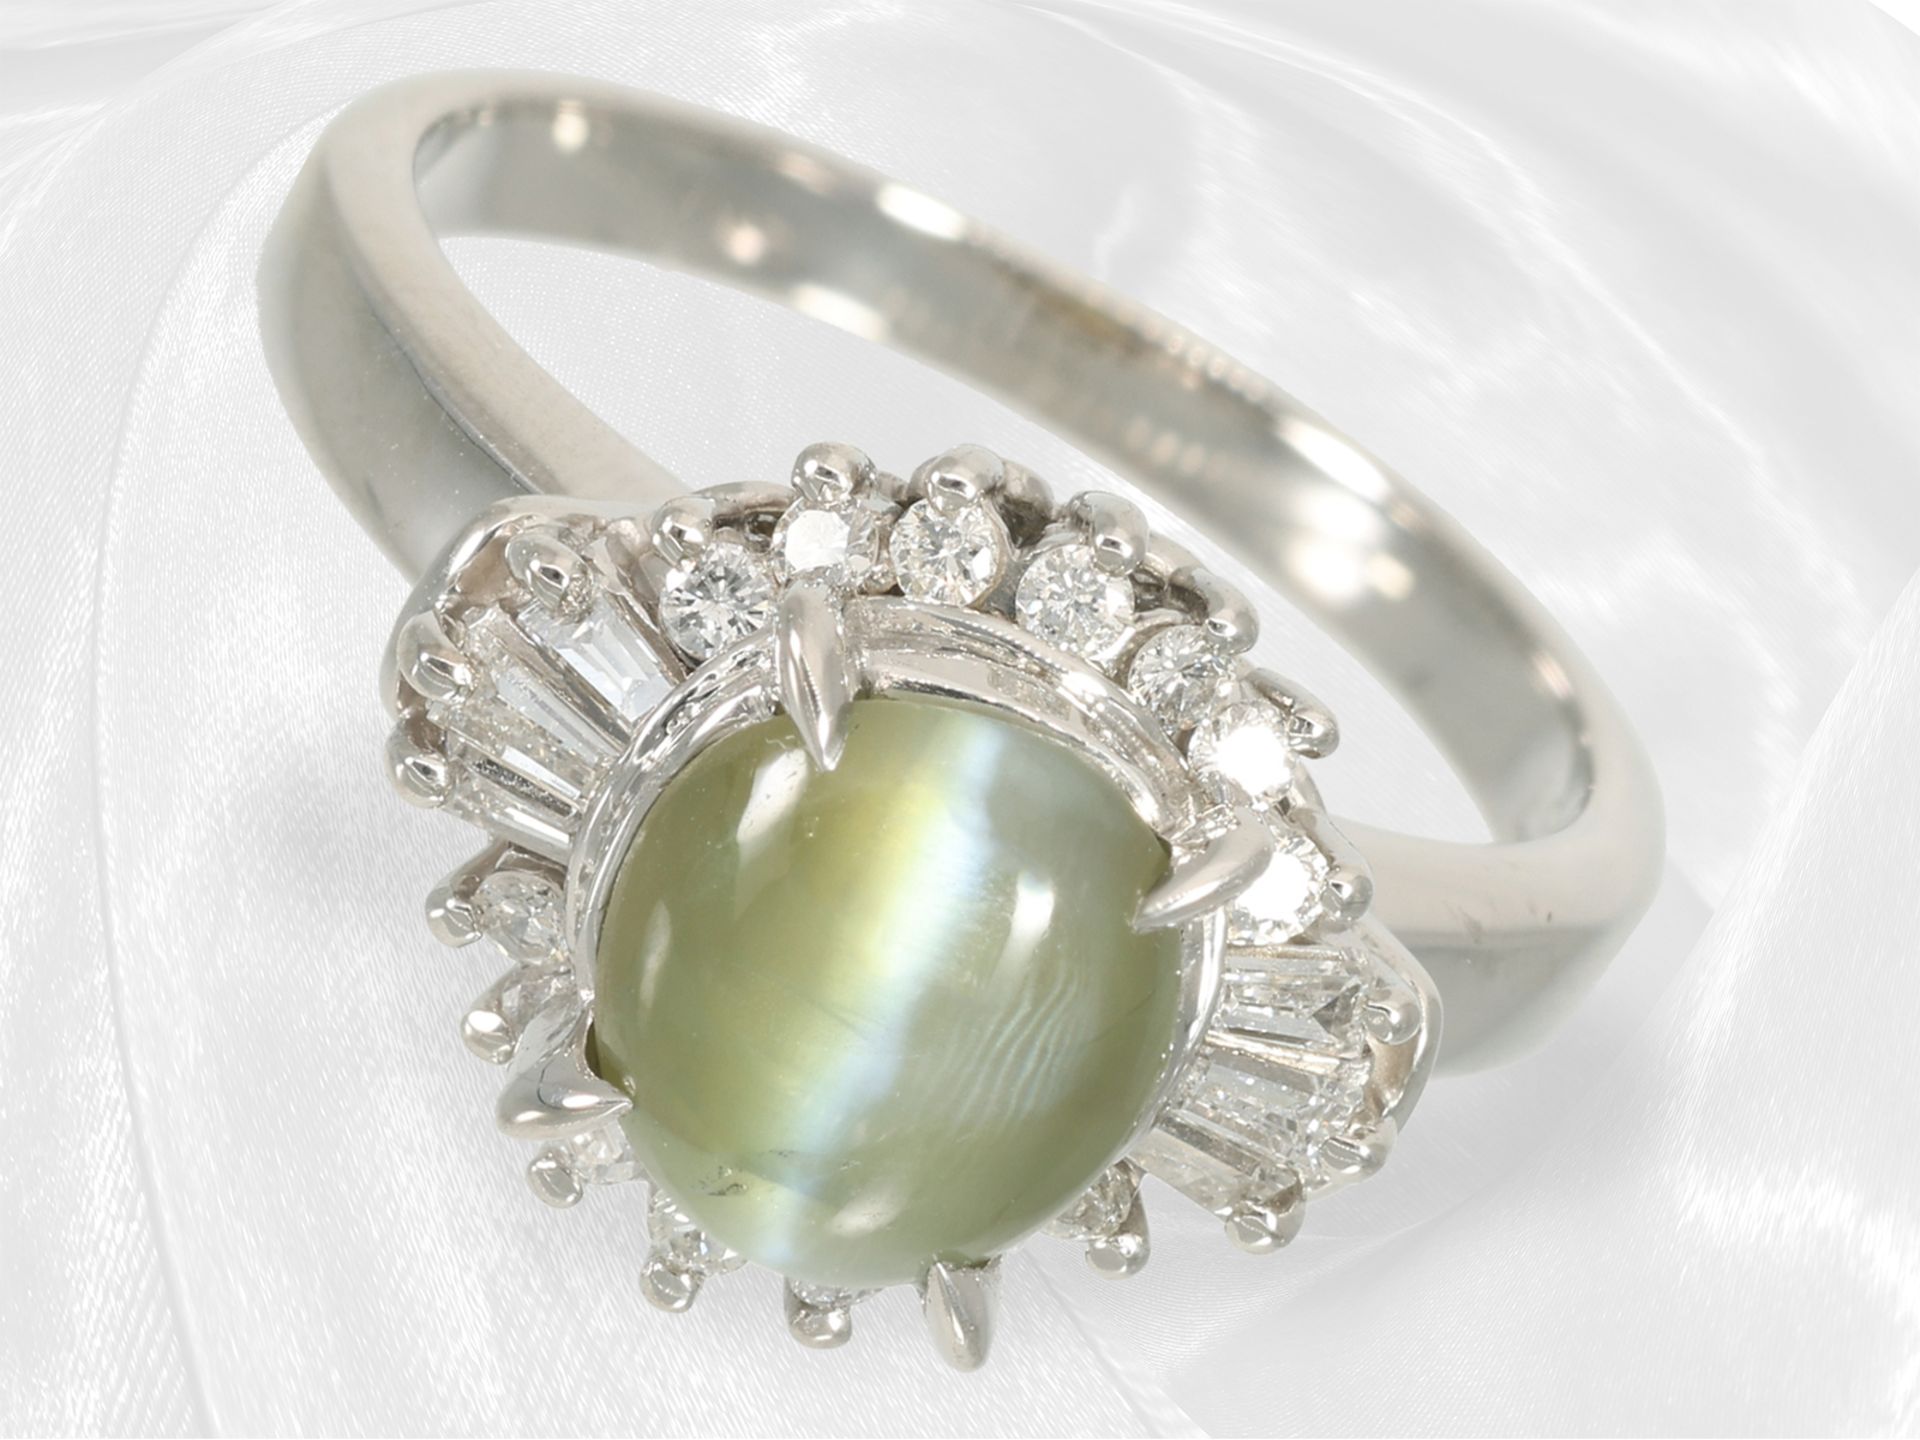 Like new platinum goldsmith ring with diamonds and rare cat's eye chrysoberyll - Image 6 of 8